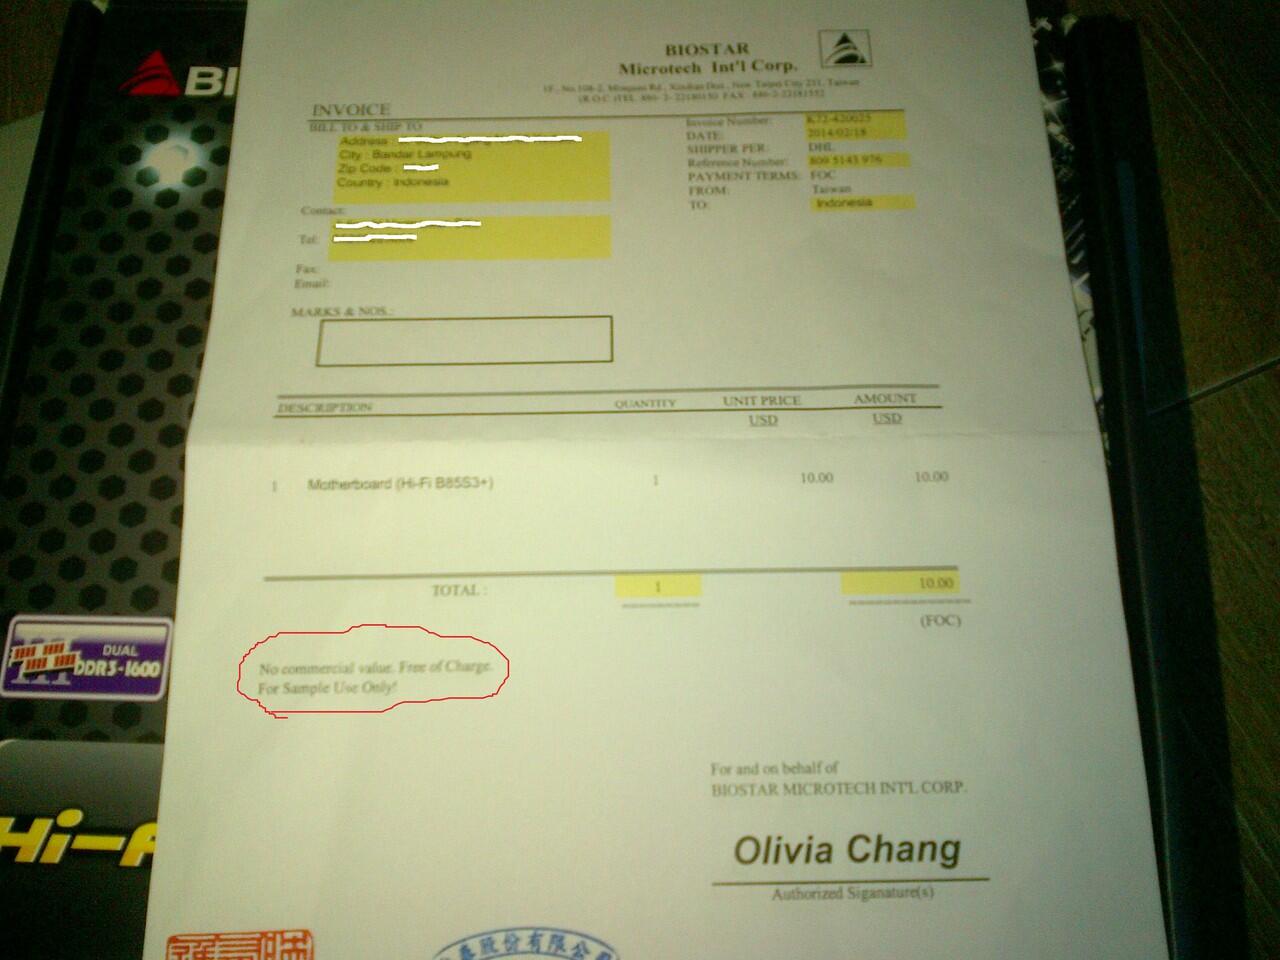 &#91;URGENT&#93; Dapet paket kiriman dari TAIWAN pake DHL Kok Disuruh bayar pajak nya gan?